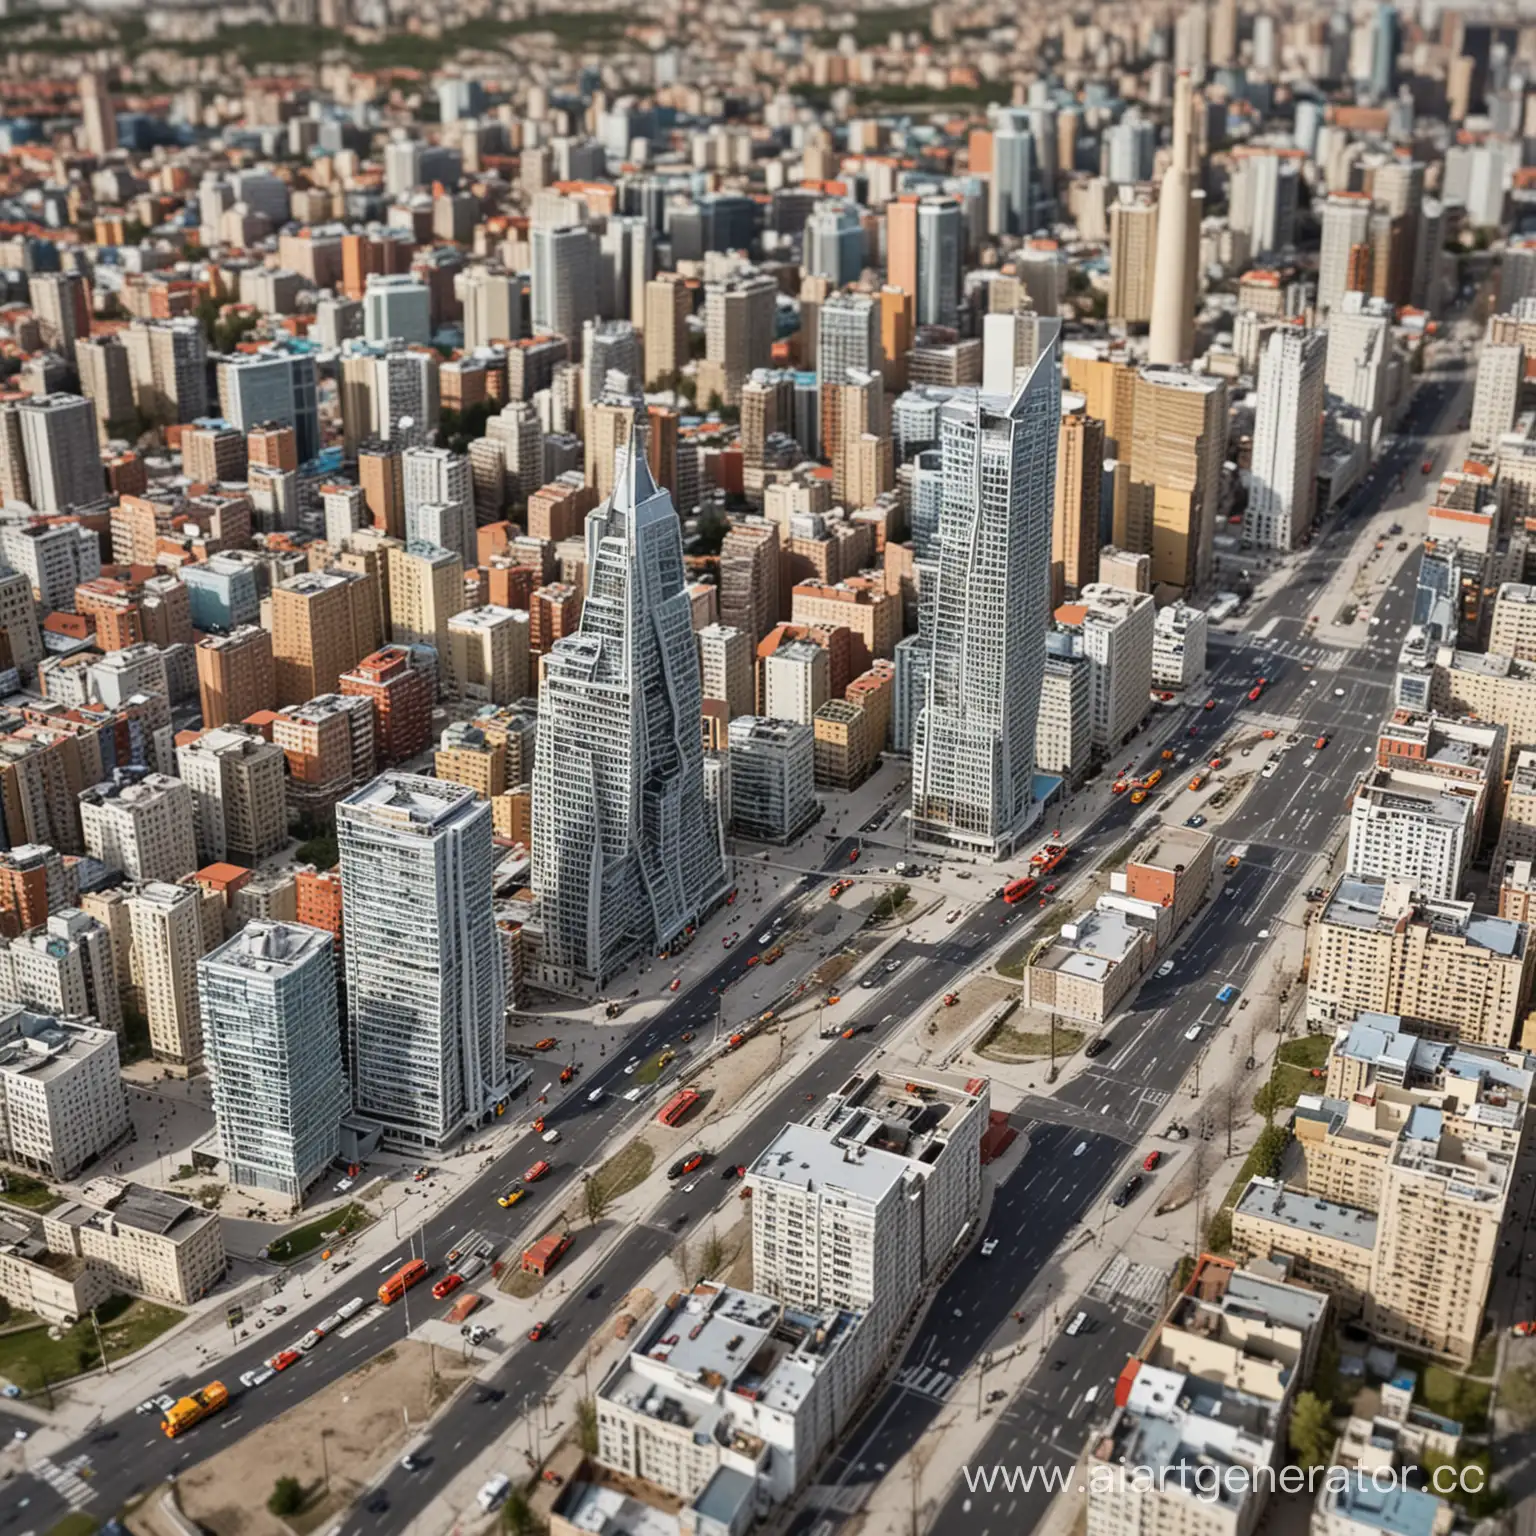 Urban-Development-Model-Regulations-and-Cityscape-Design